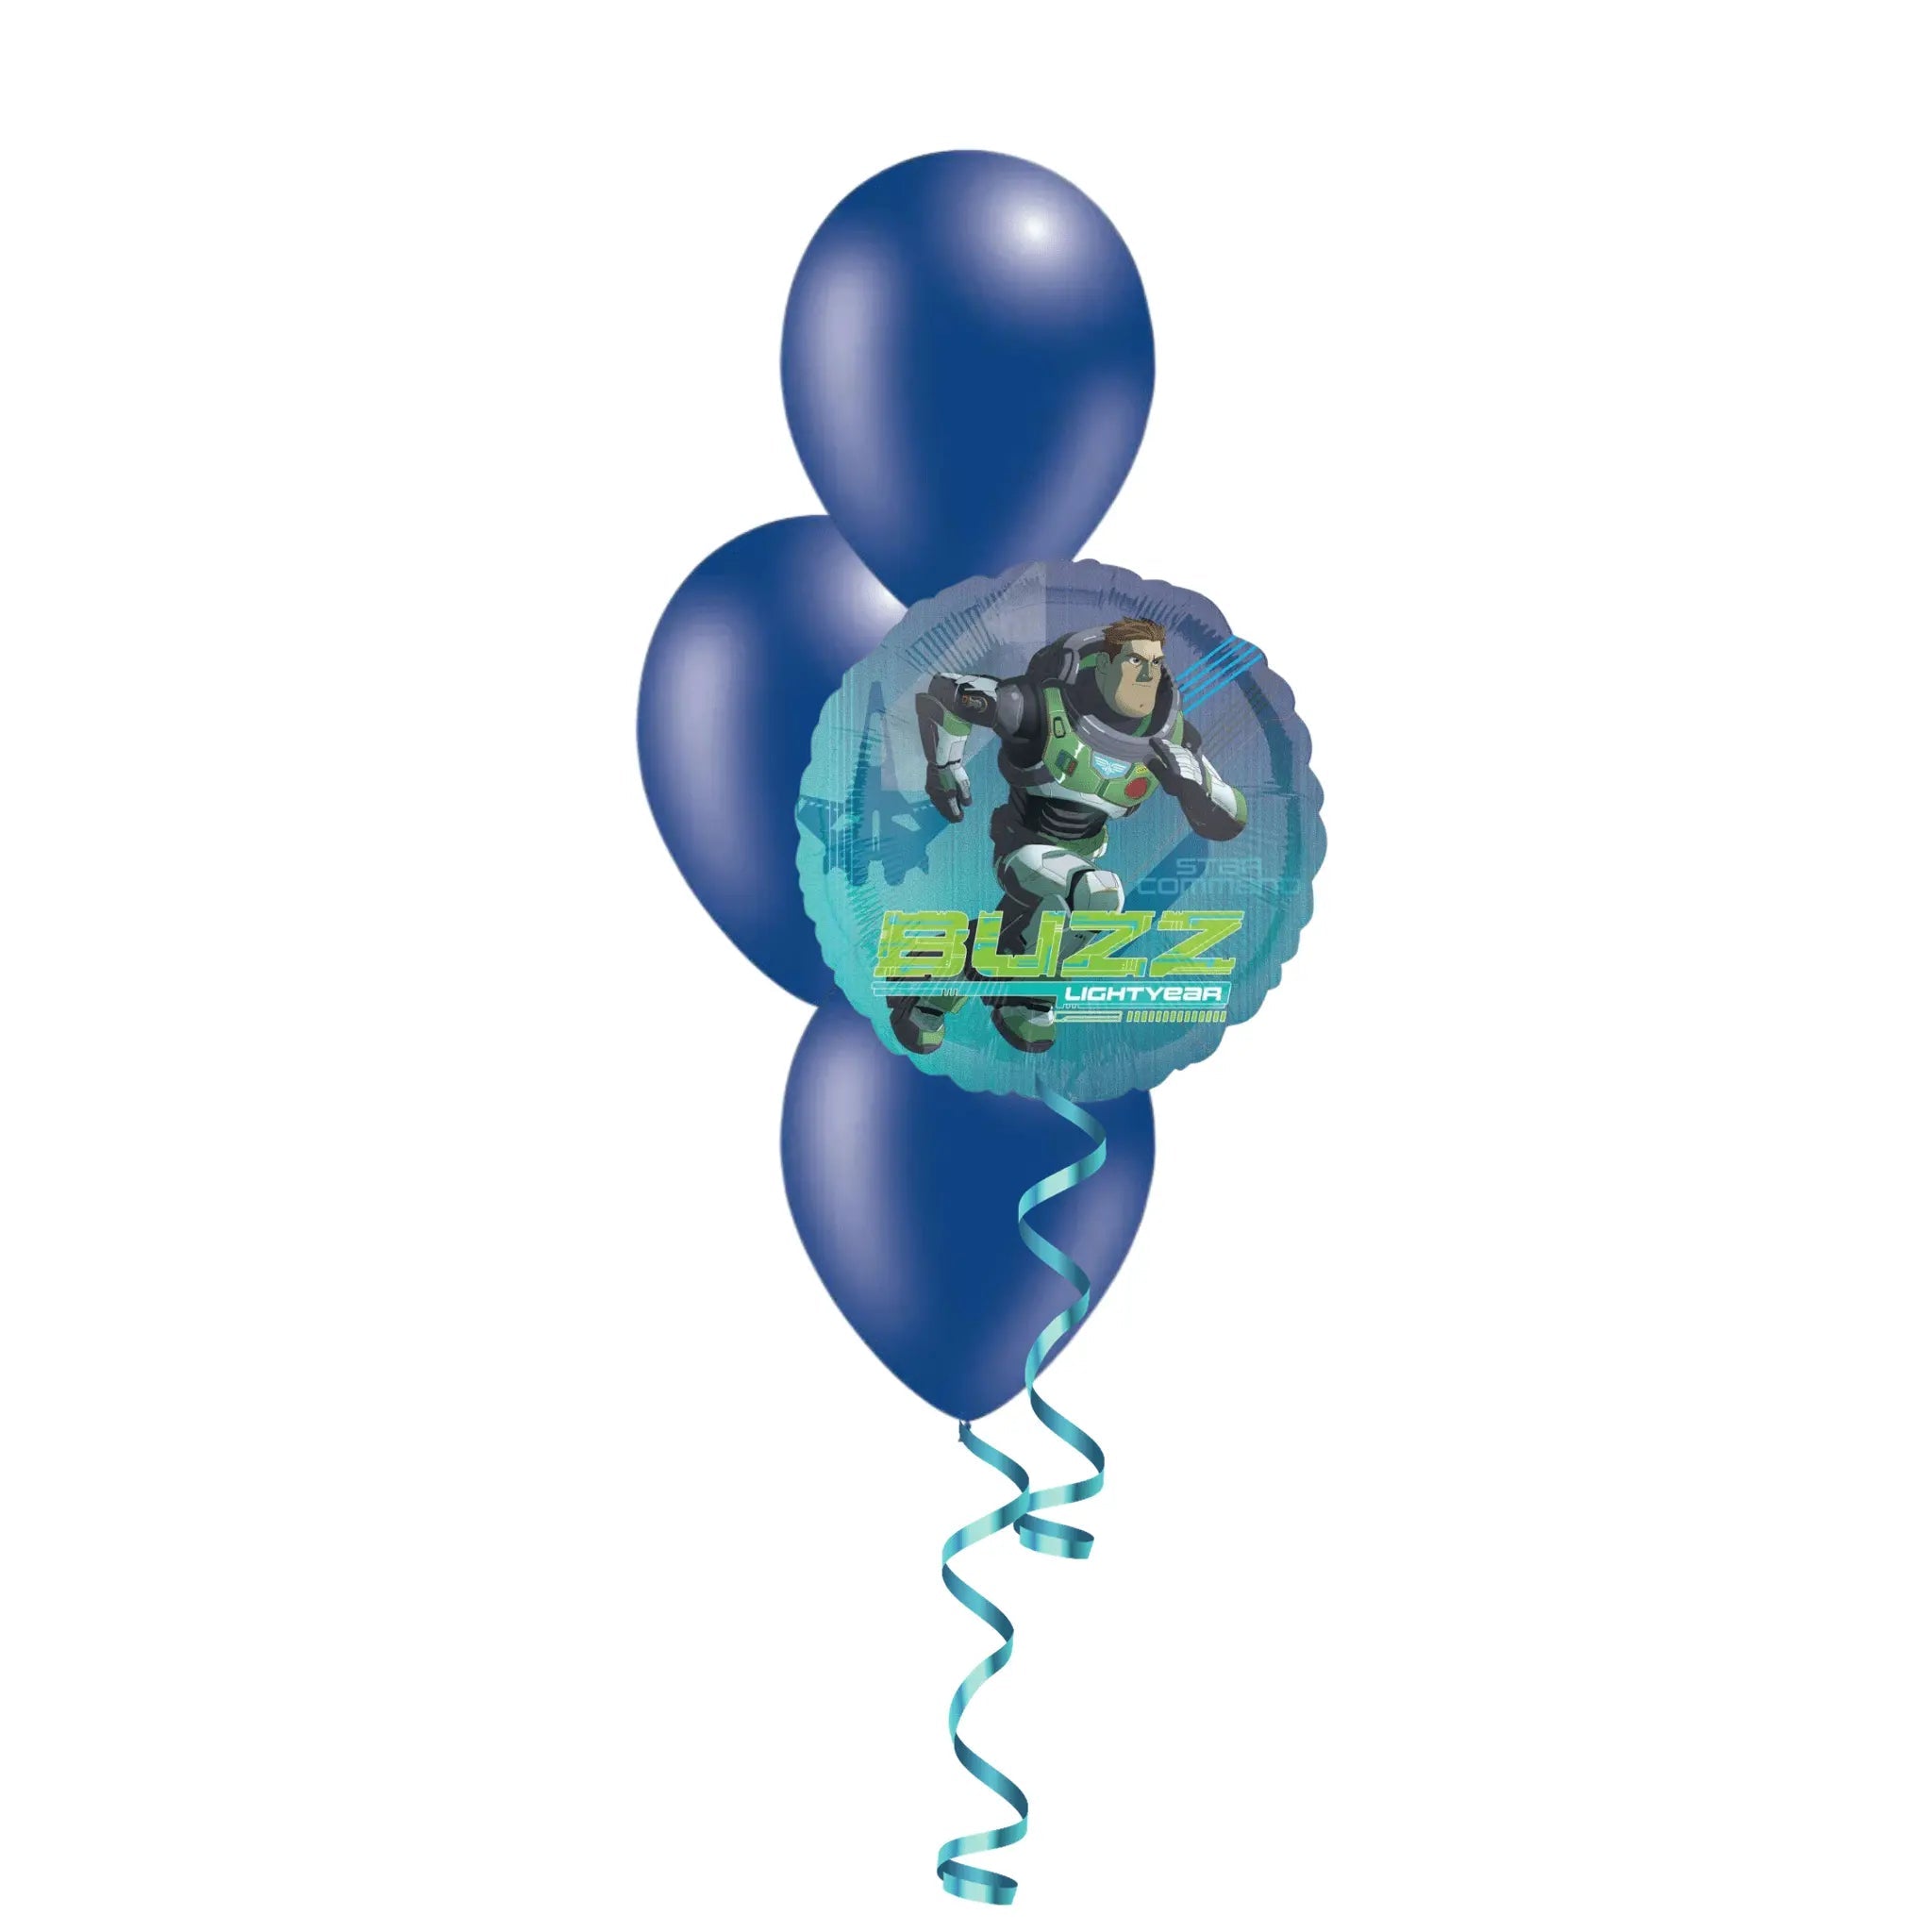 Buzz Lightyear Balloon Bouquet | The Party Hut